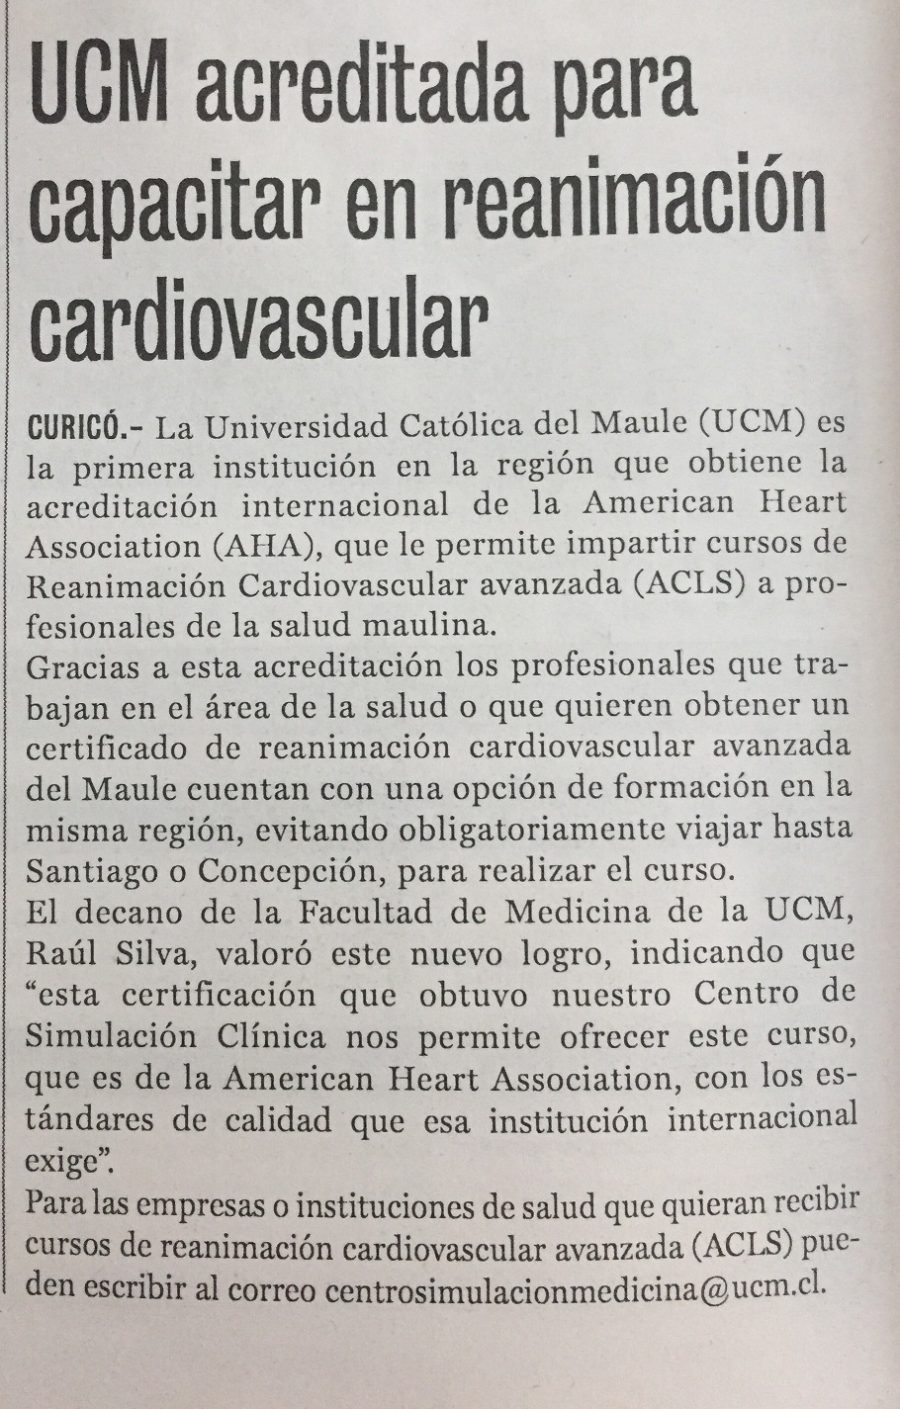 30 de agosto en Diario La Prensa: “UCM acreditada para capacitar en reanimación cardiovascular”